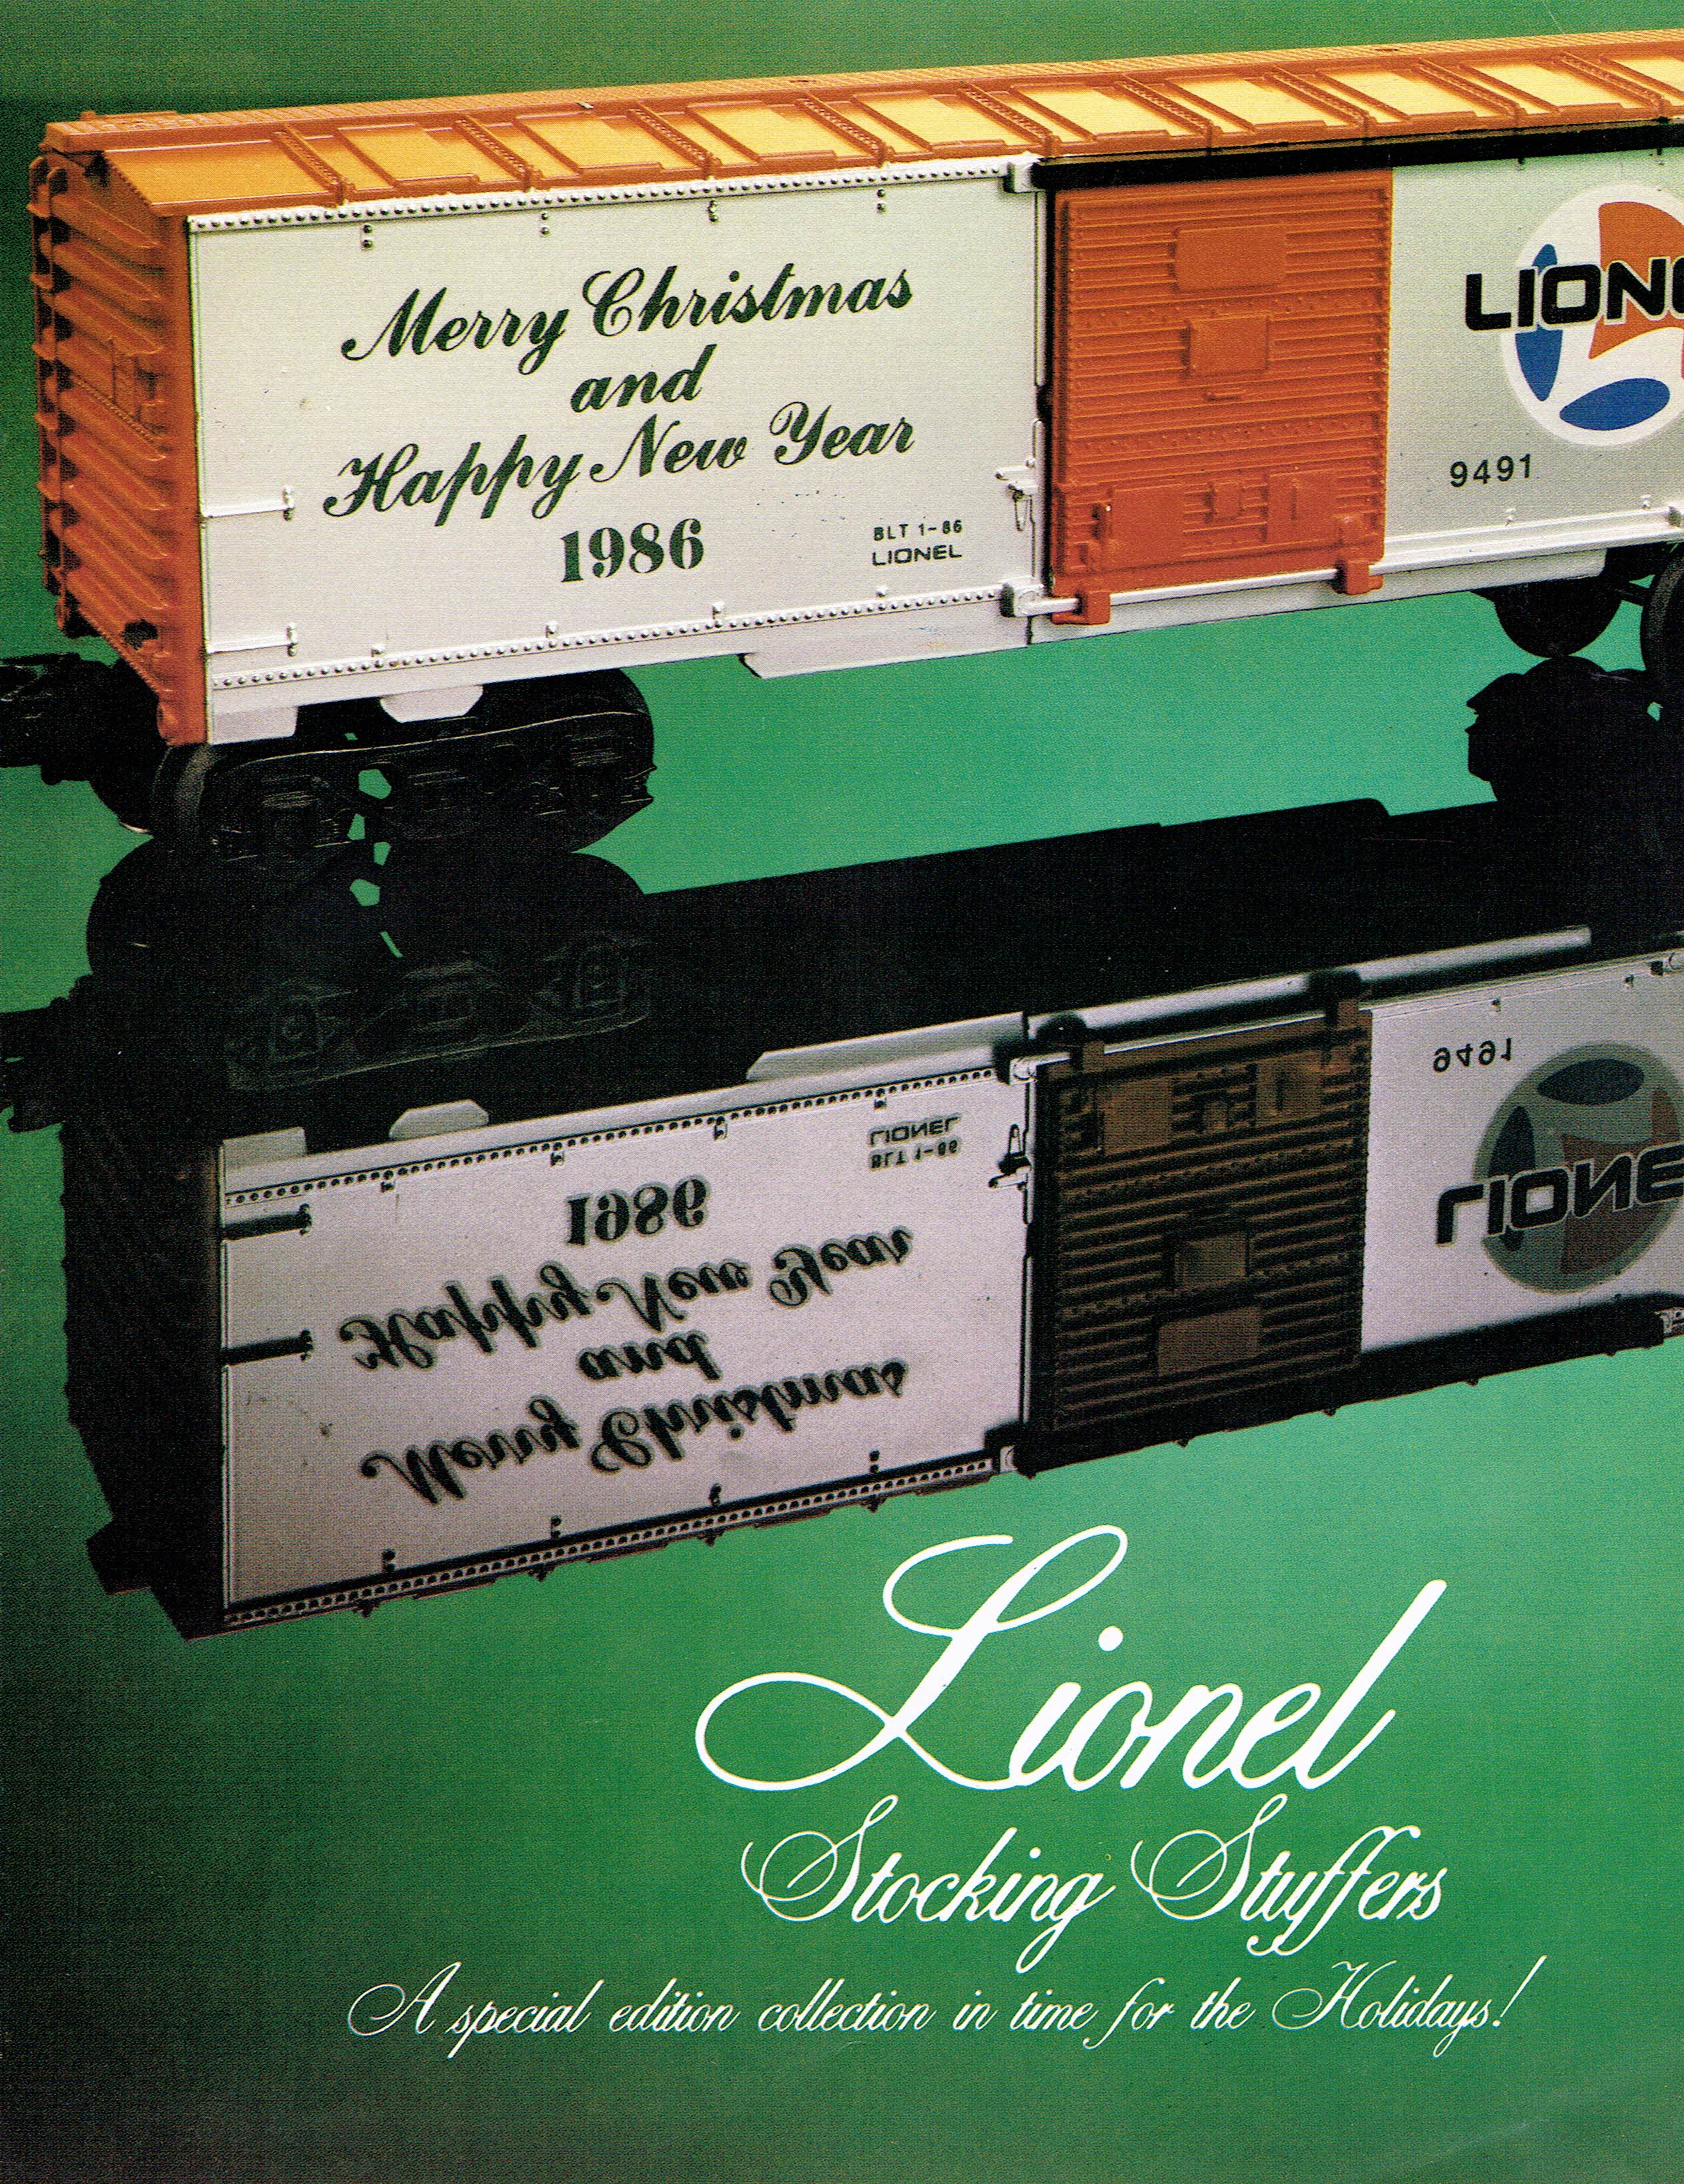 Lionel Trains 1986 Stocking Stuffers Flier image